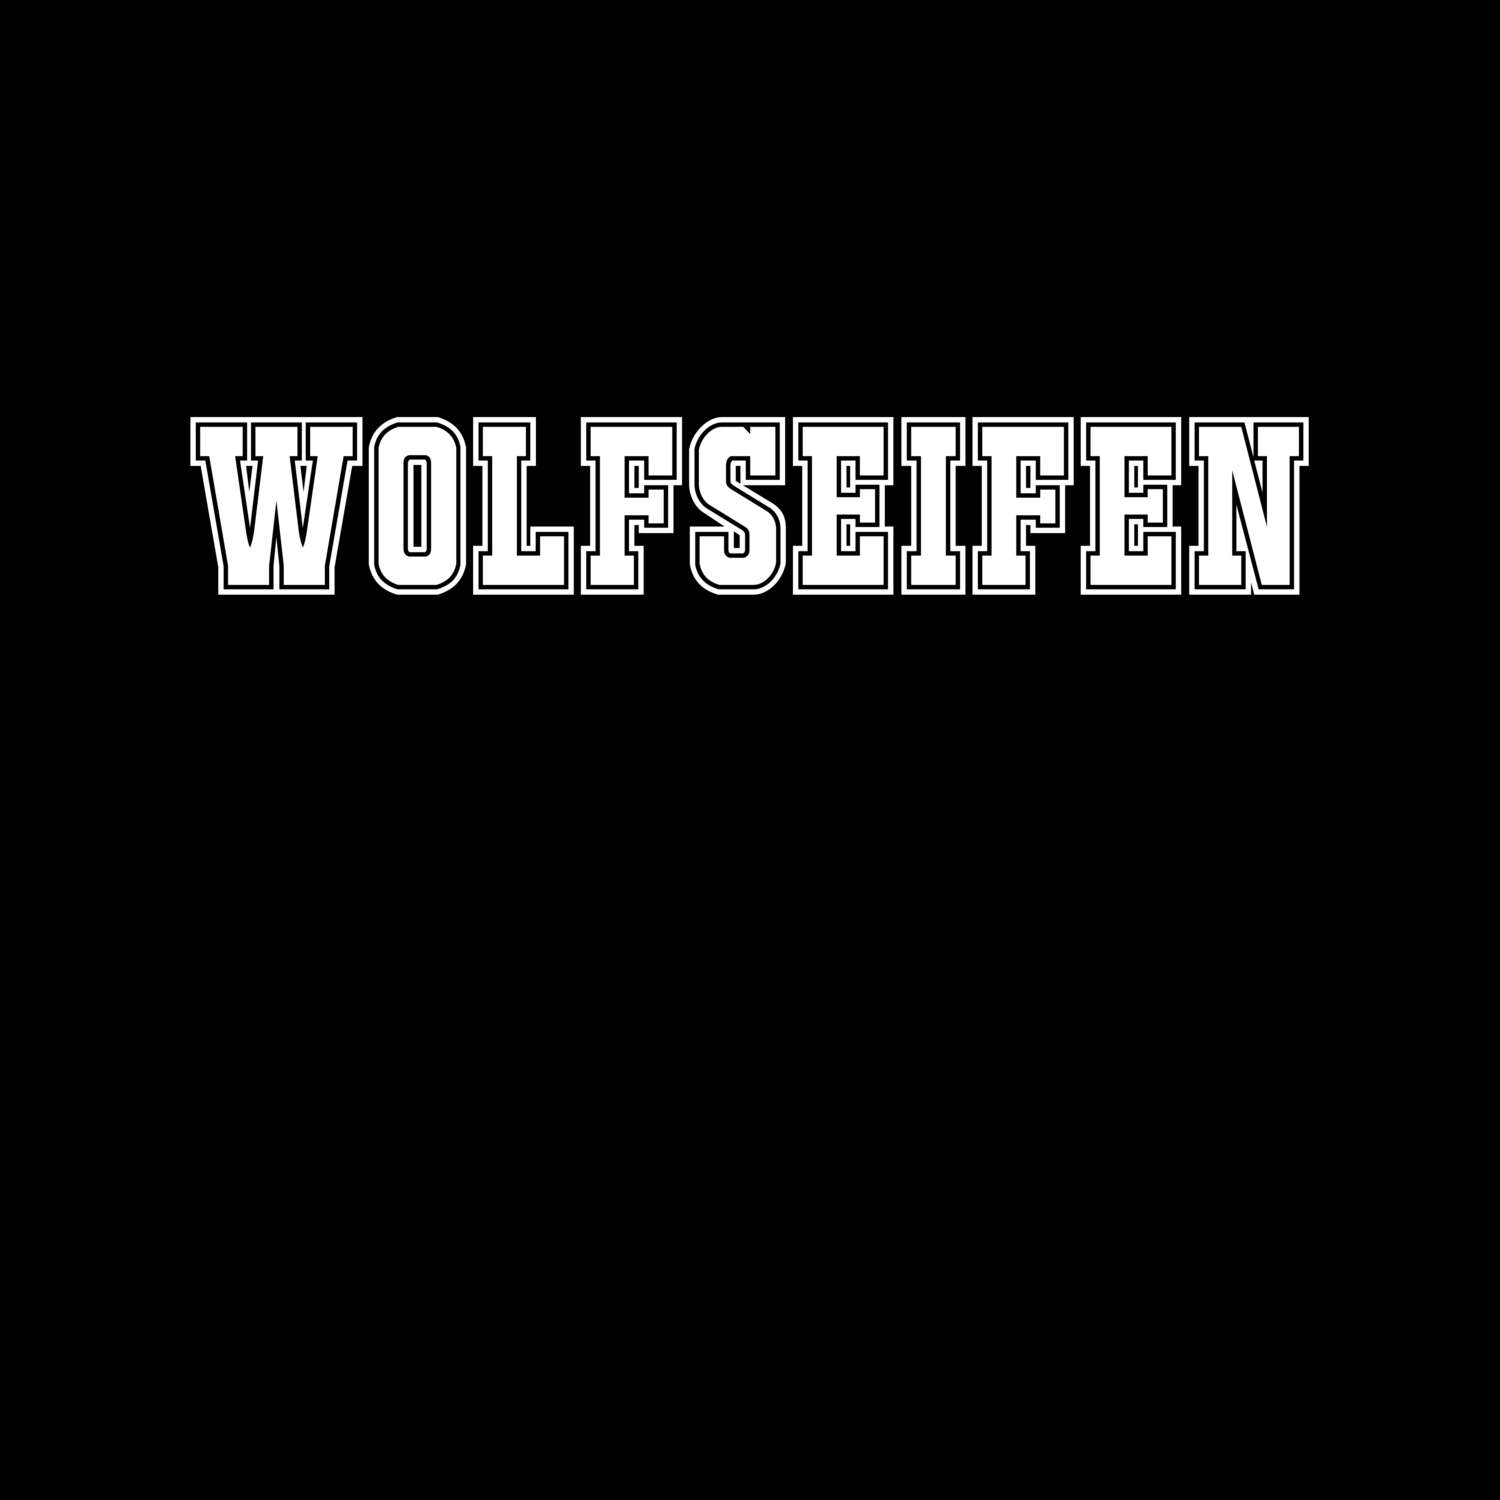 Wolfseifen T-Shirt »Classic«